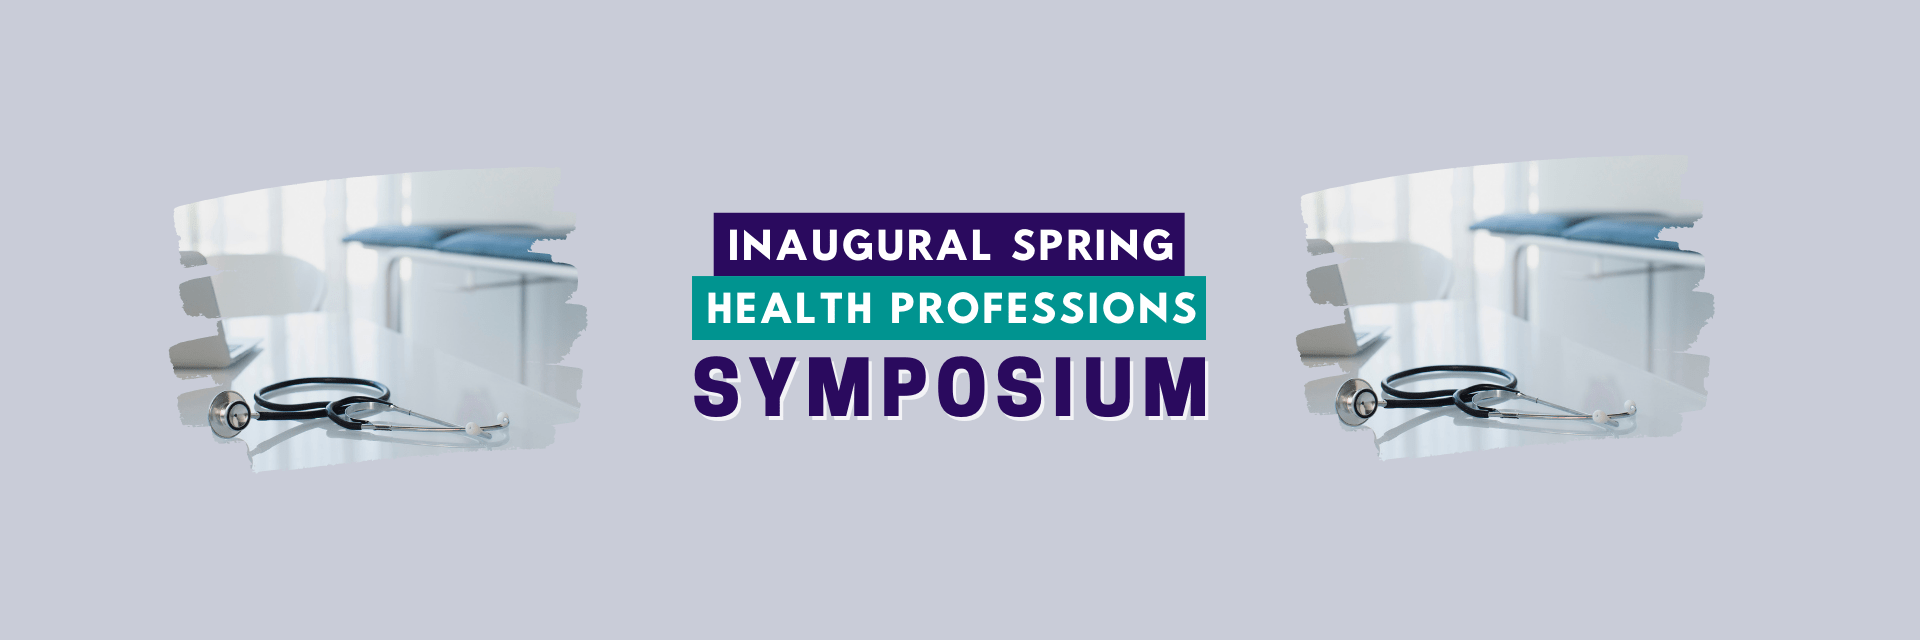 Banner: Inaugural Spring Health Professions Symposium